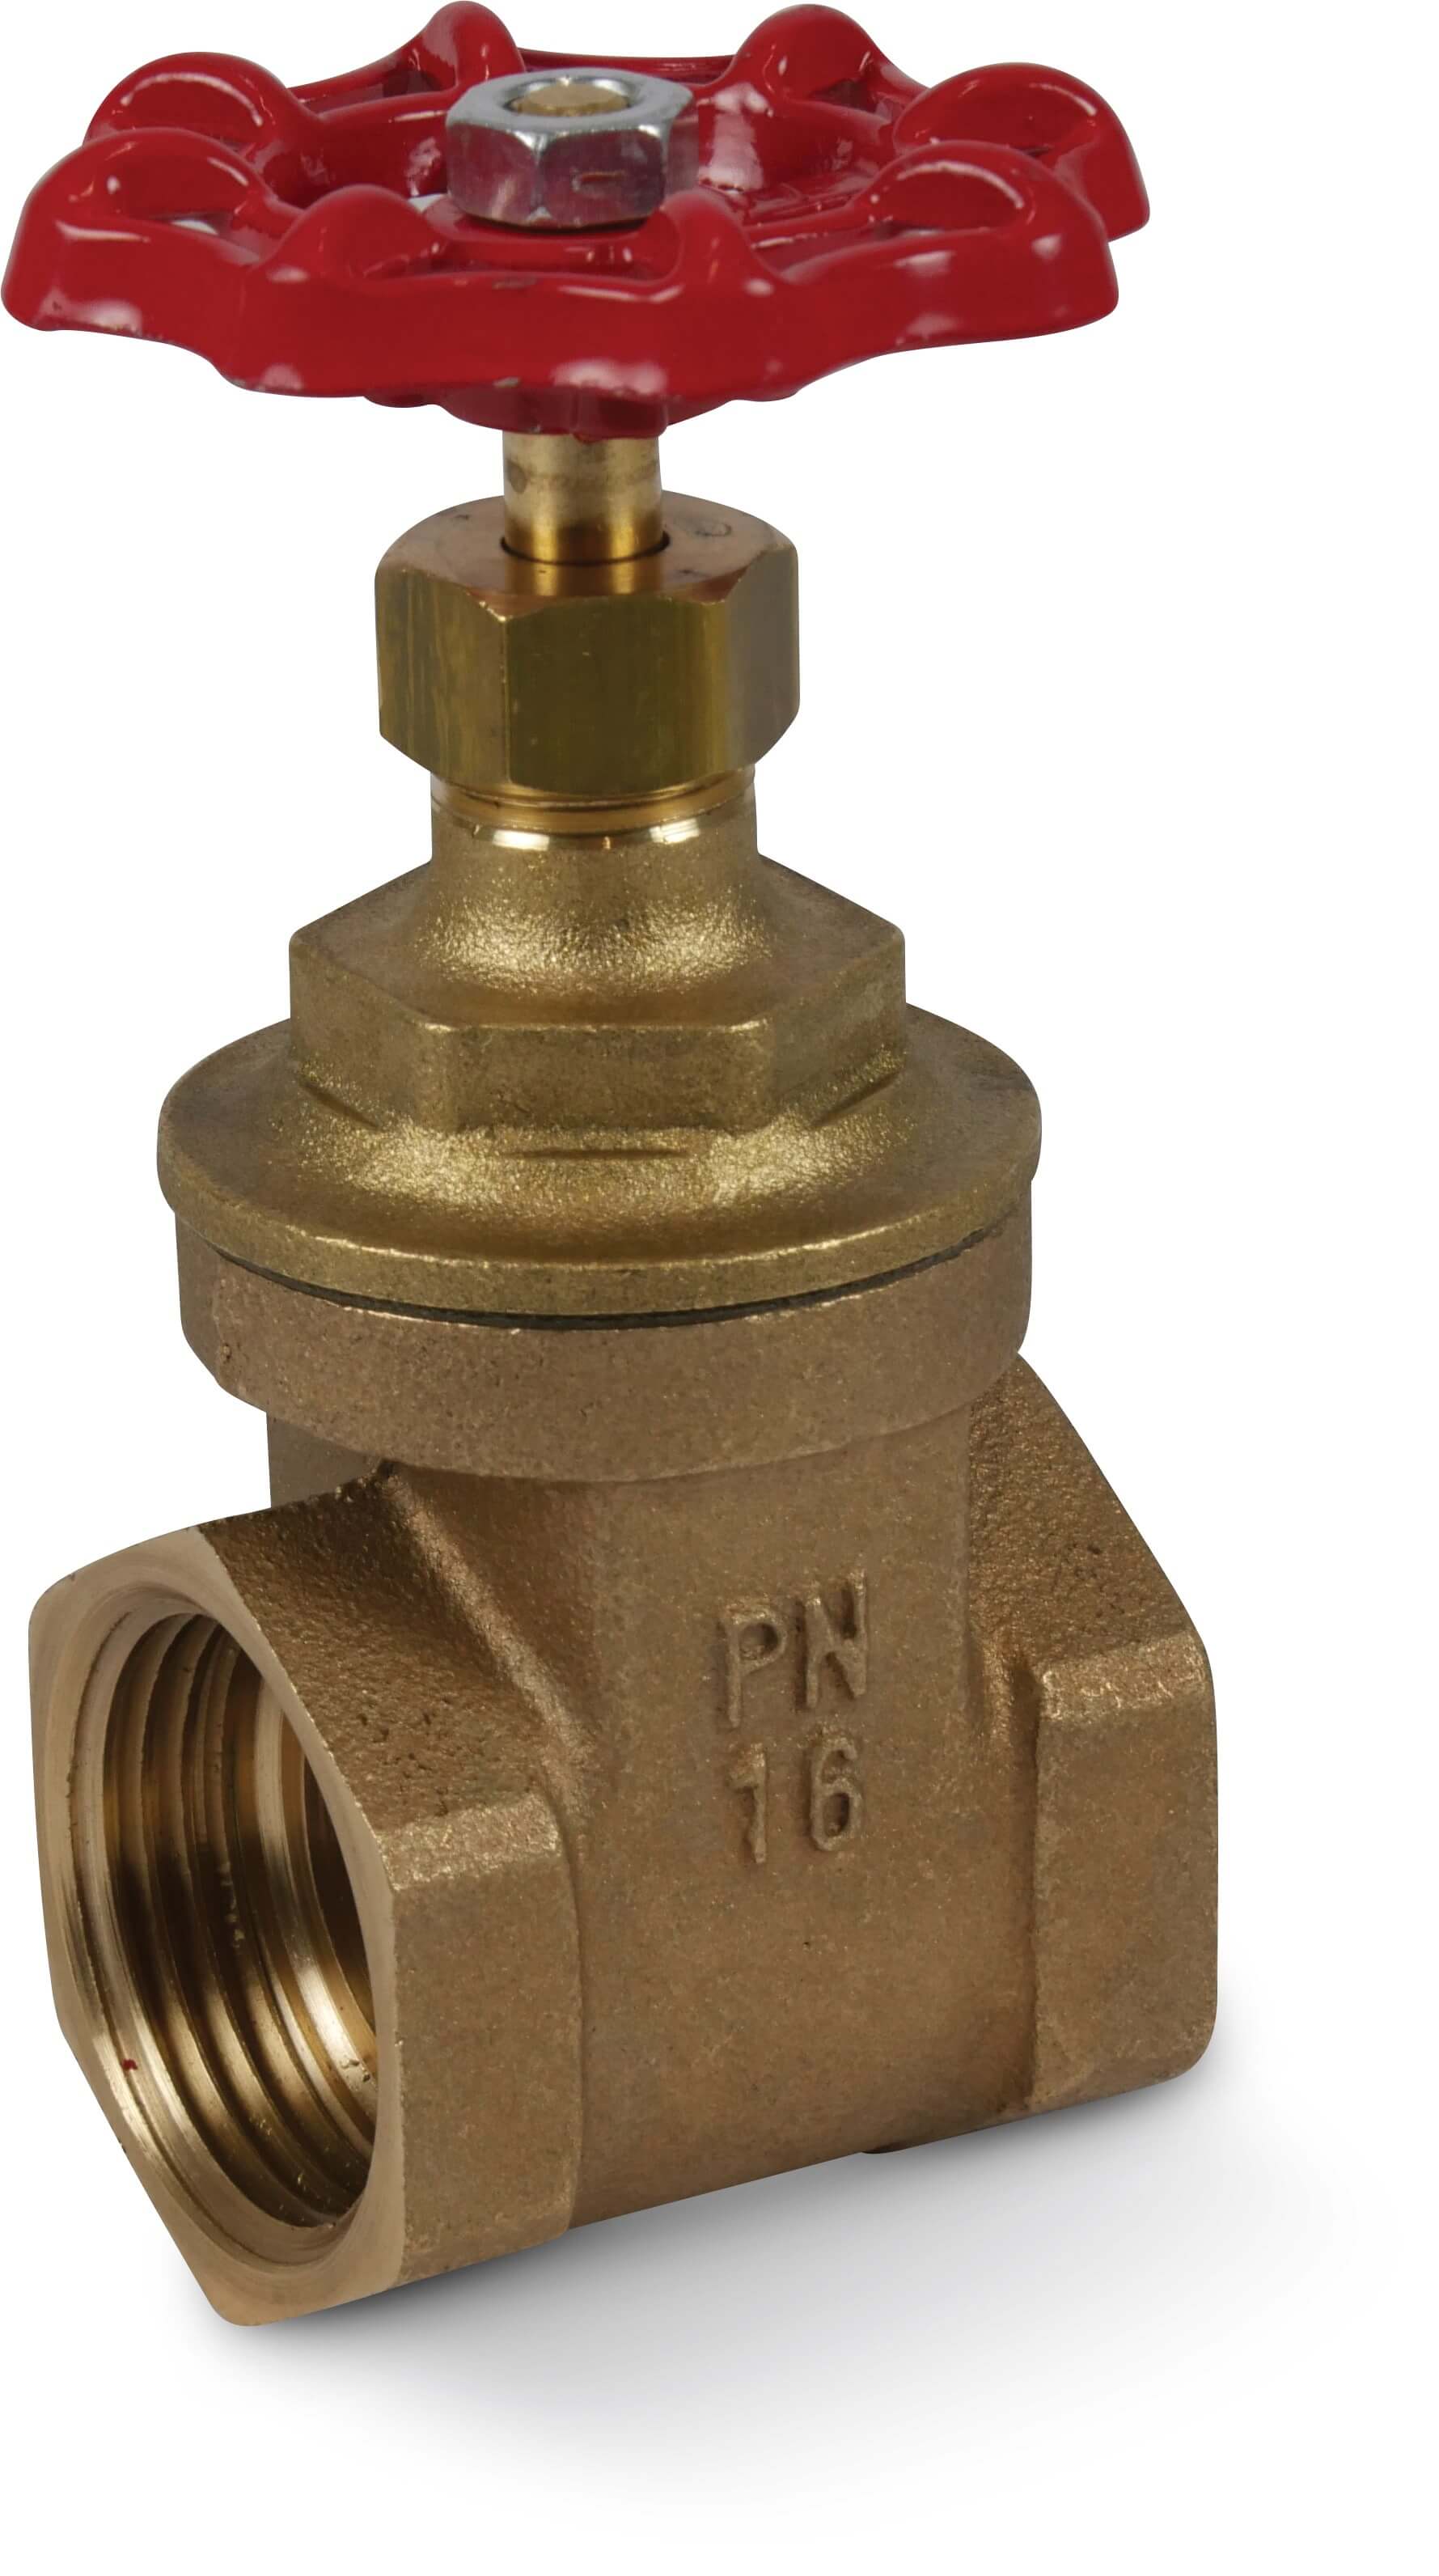 Profec Gate valve bronze 1/2" female thread 16bar